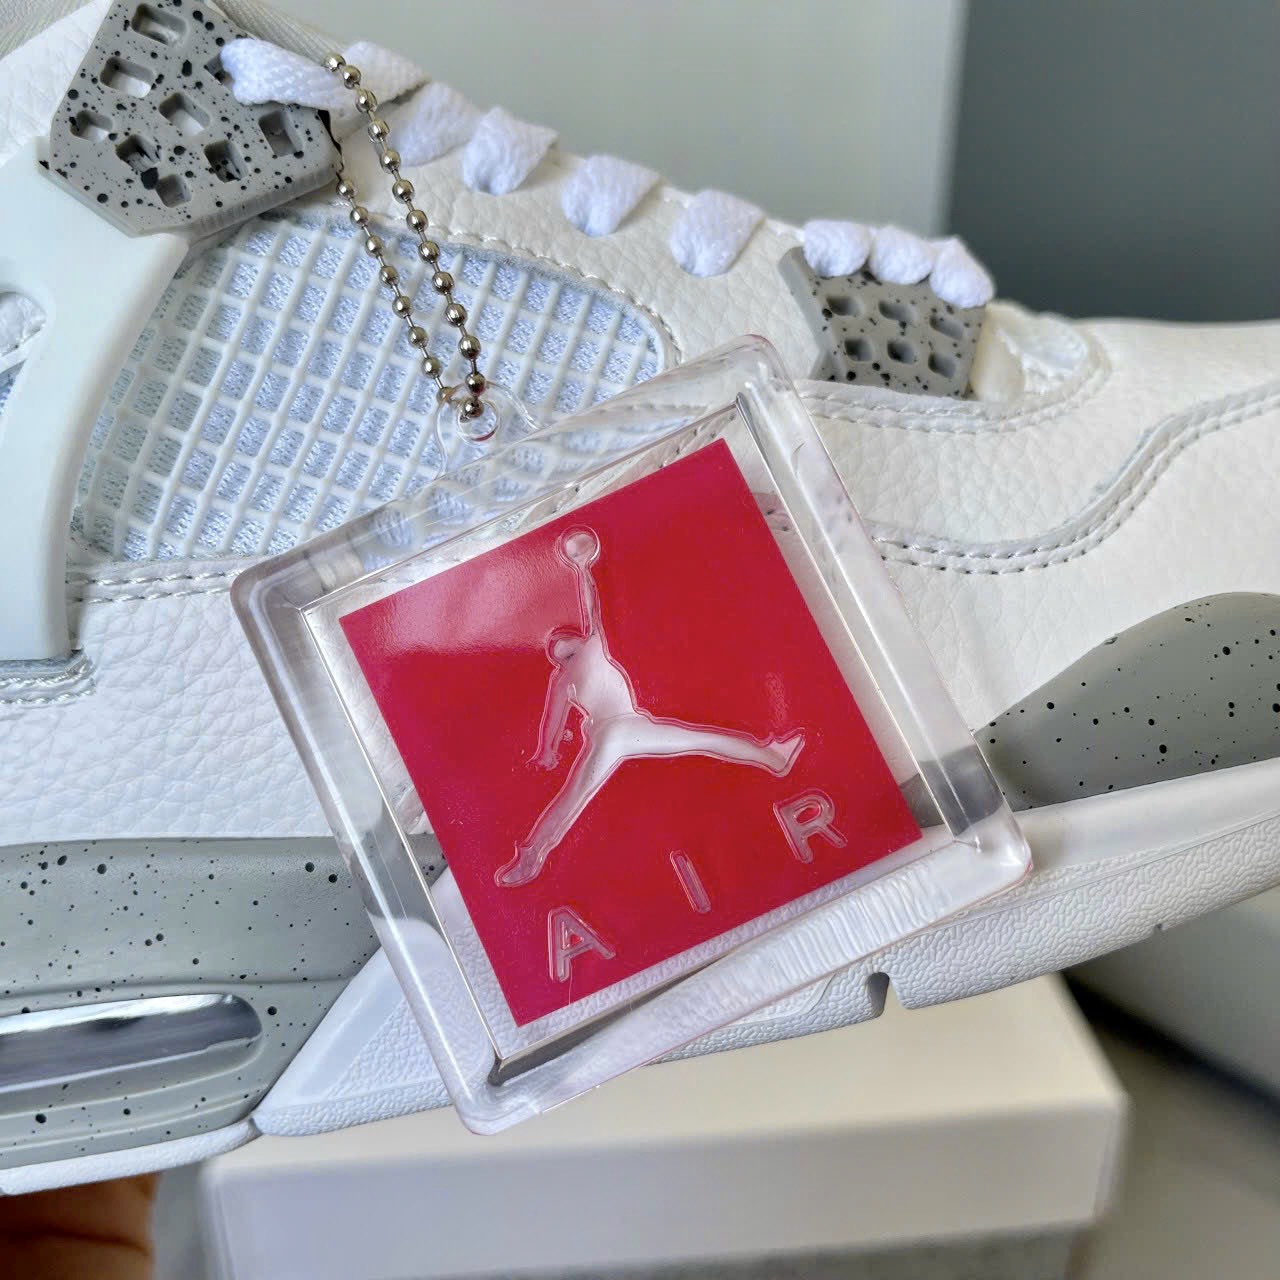 Giày Nike Air Jordan 4 Retro White Oreo Best Quality